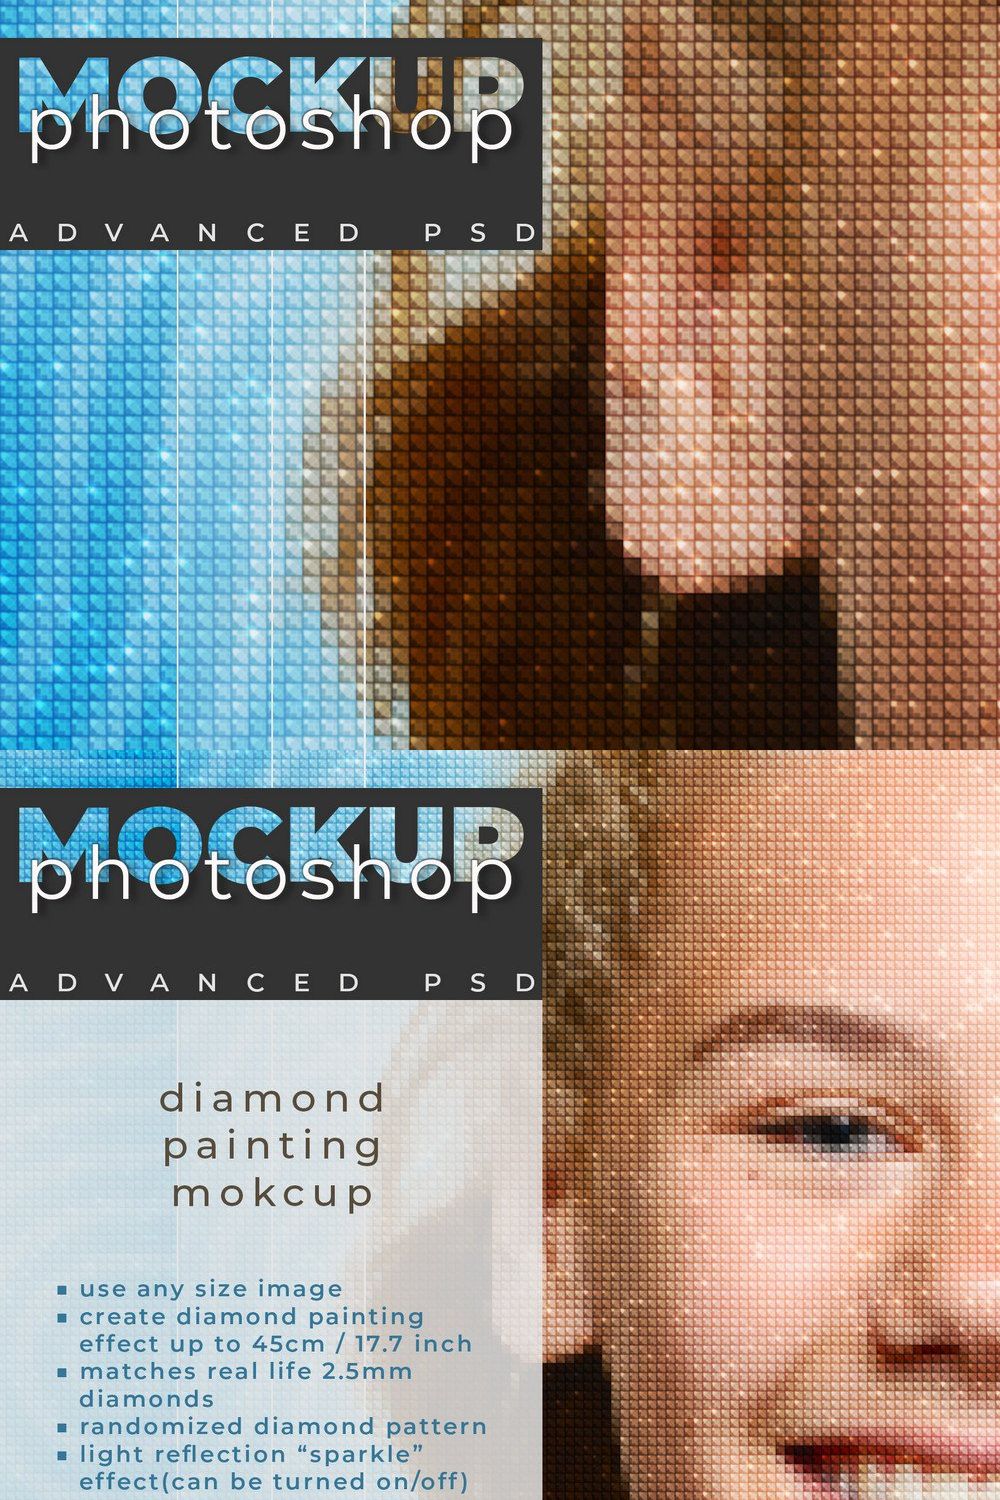 Diamond painting mockup pinterest preview image.